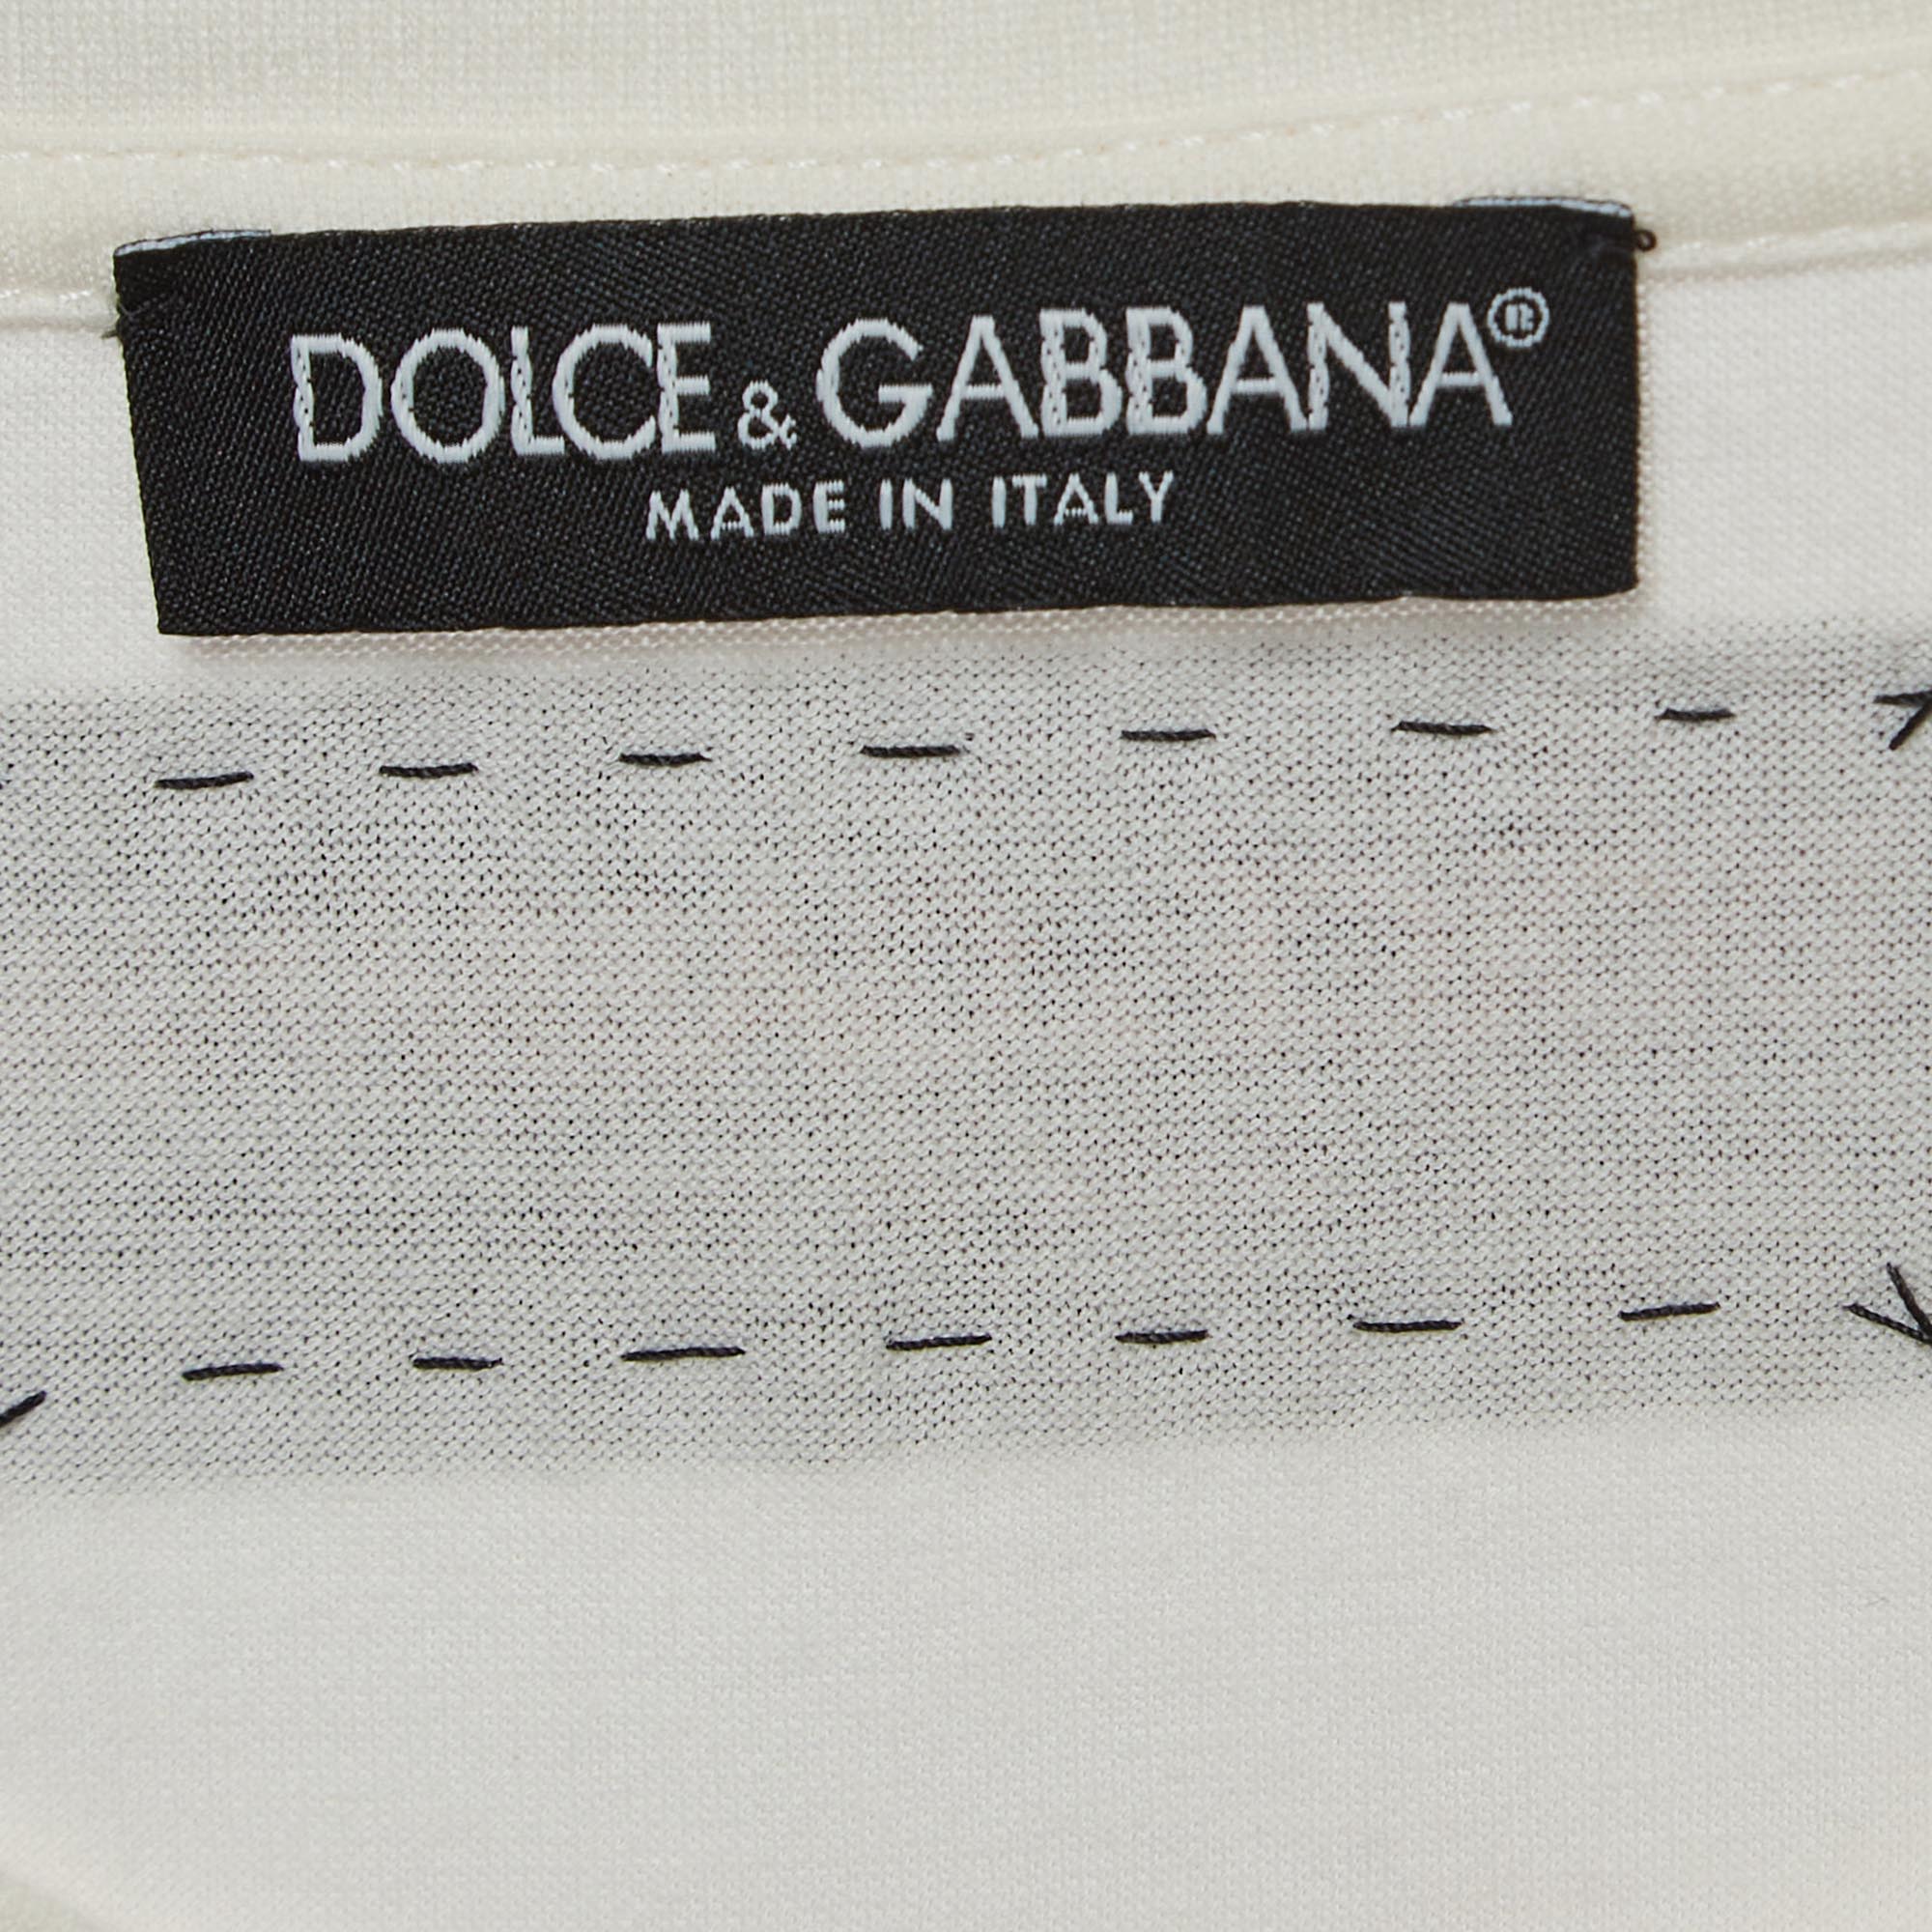 Dolce & Gabbana White Floral Printed Cotton T-Shirt S